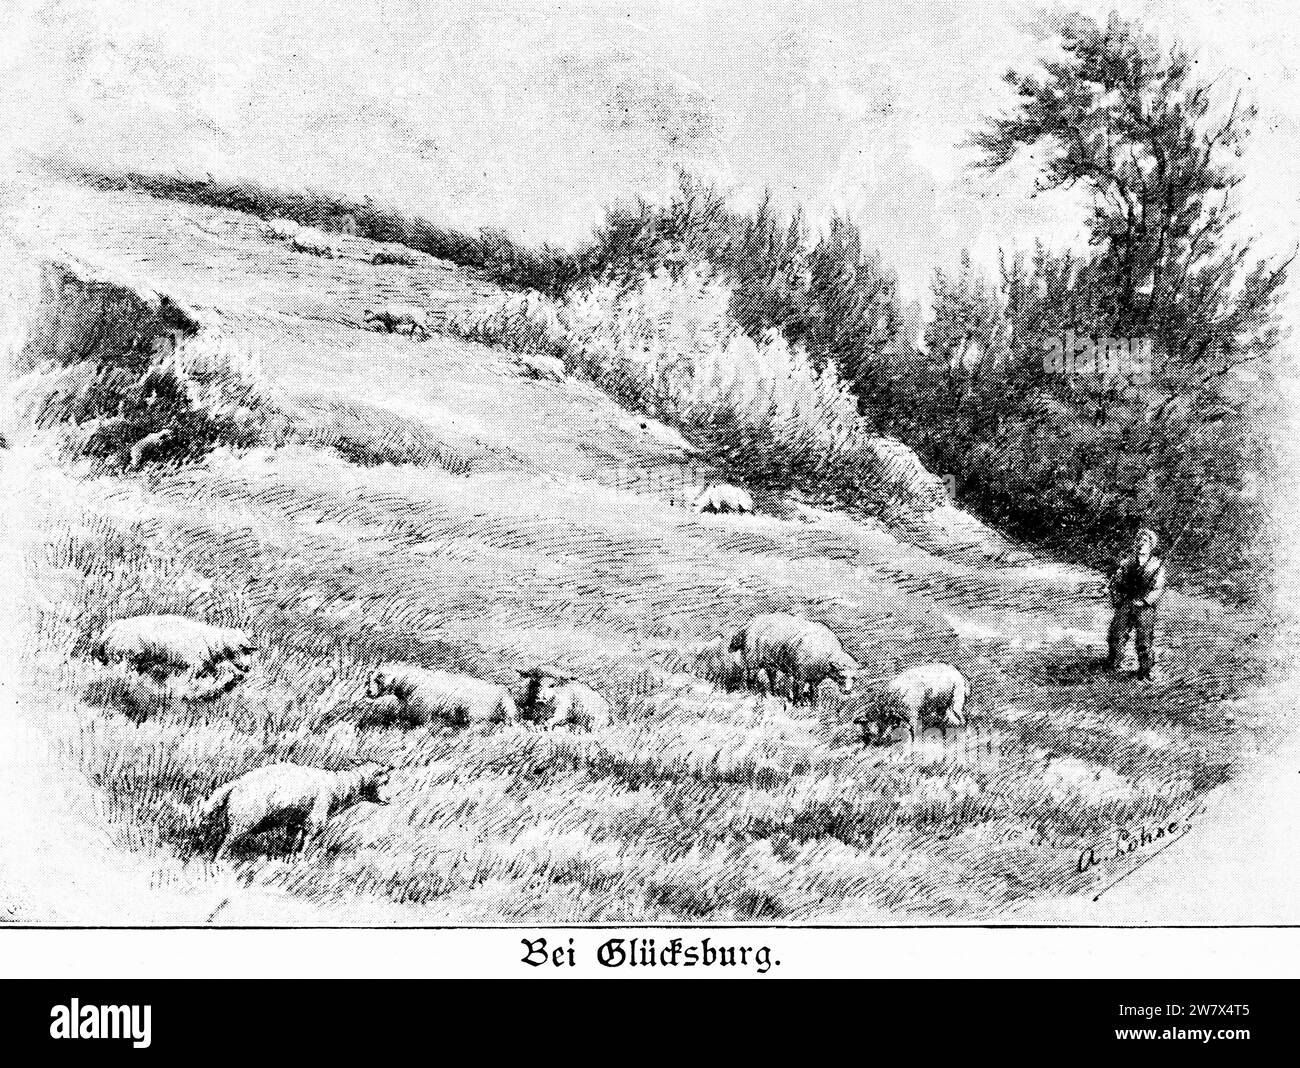 Shepherd with some sheep in rural landscape near Glücksburg, Schleswig-Holstein, Northern Germany, histrorical Illustration 1896 Stock Photo